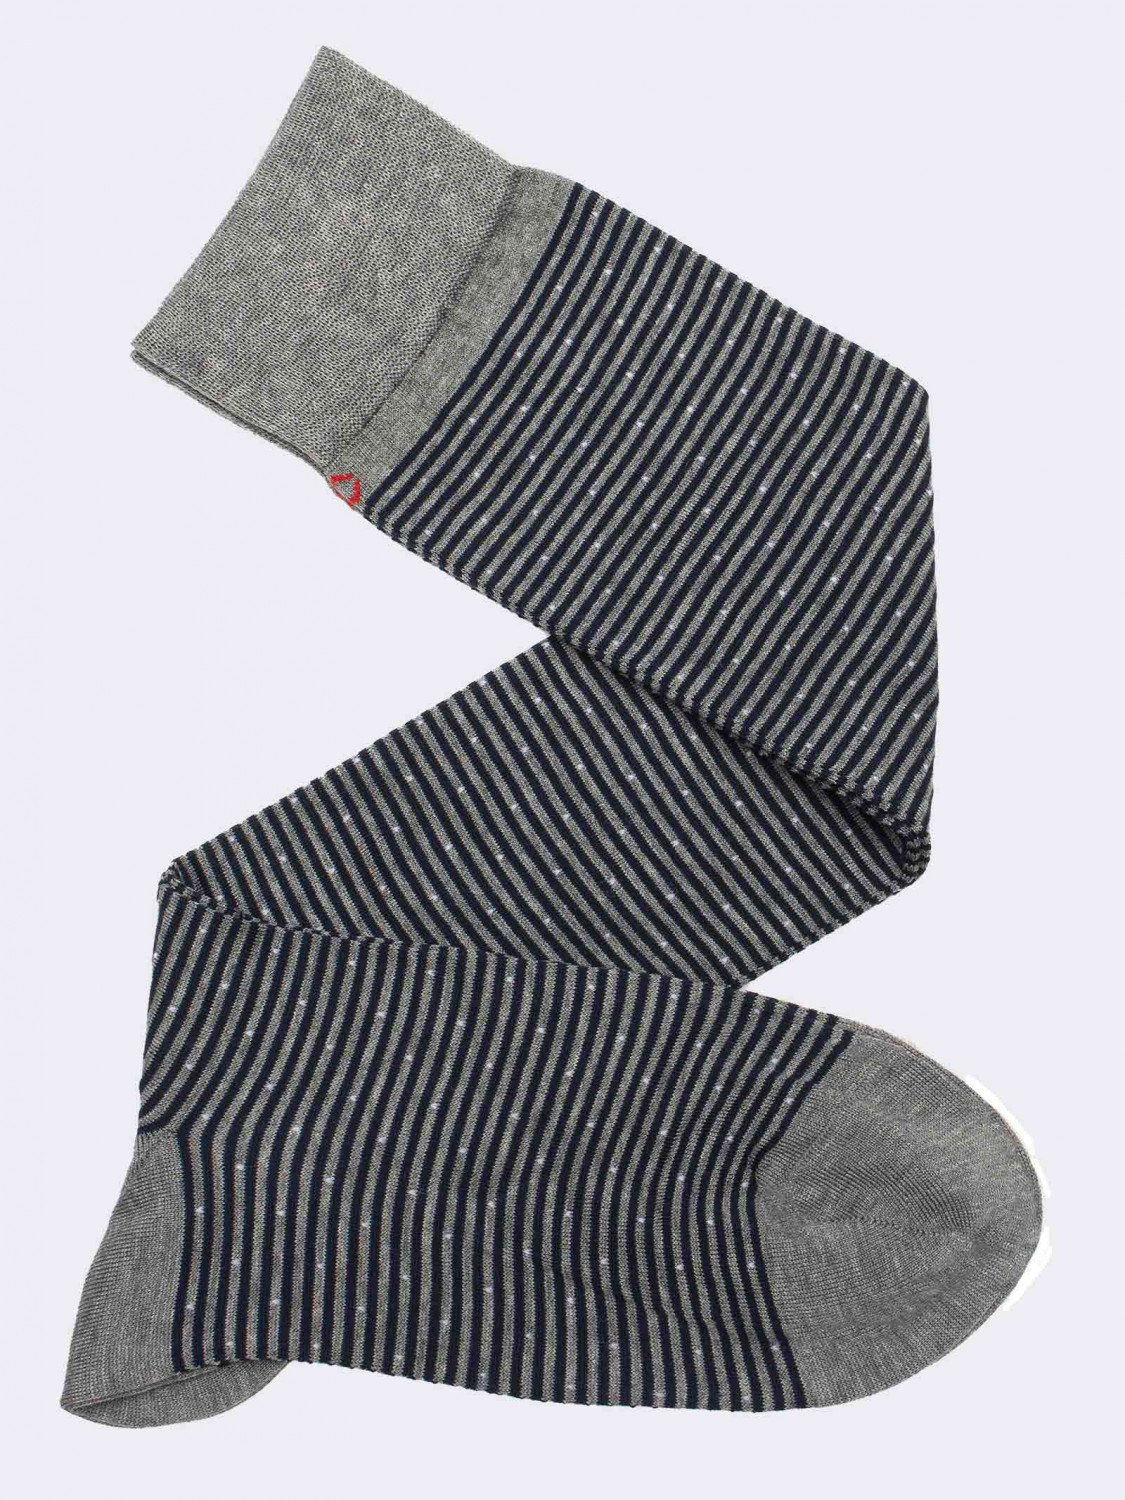 Men's knee-high socks striped pattern in fresh cotton